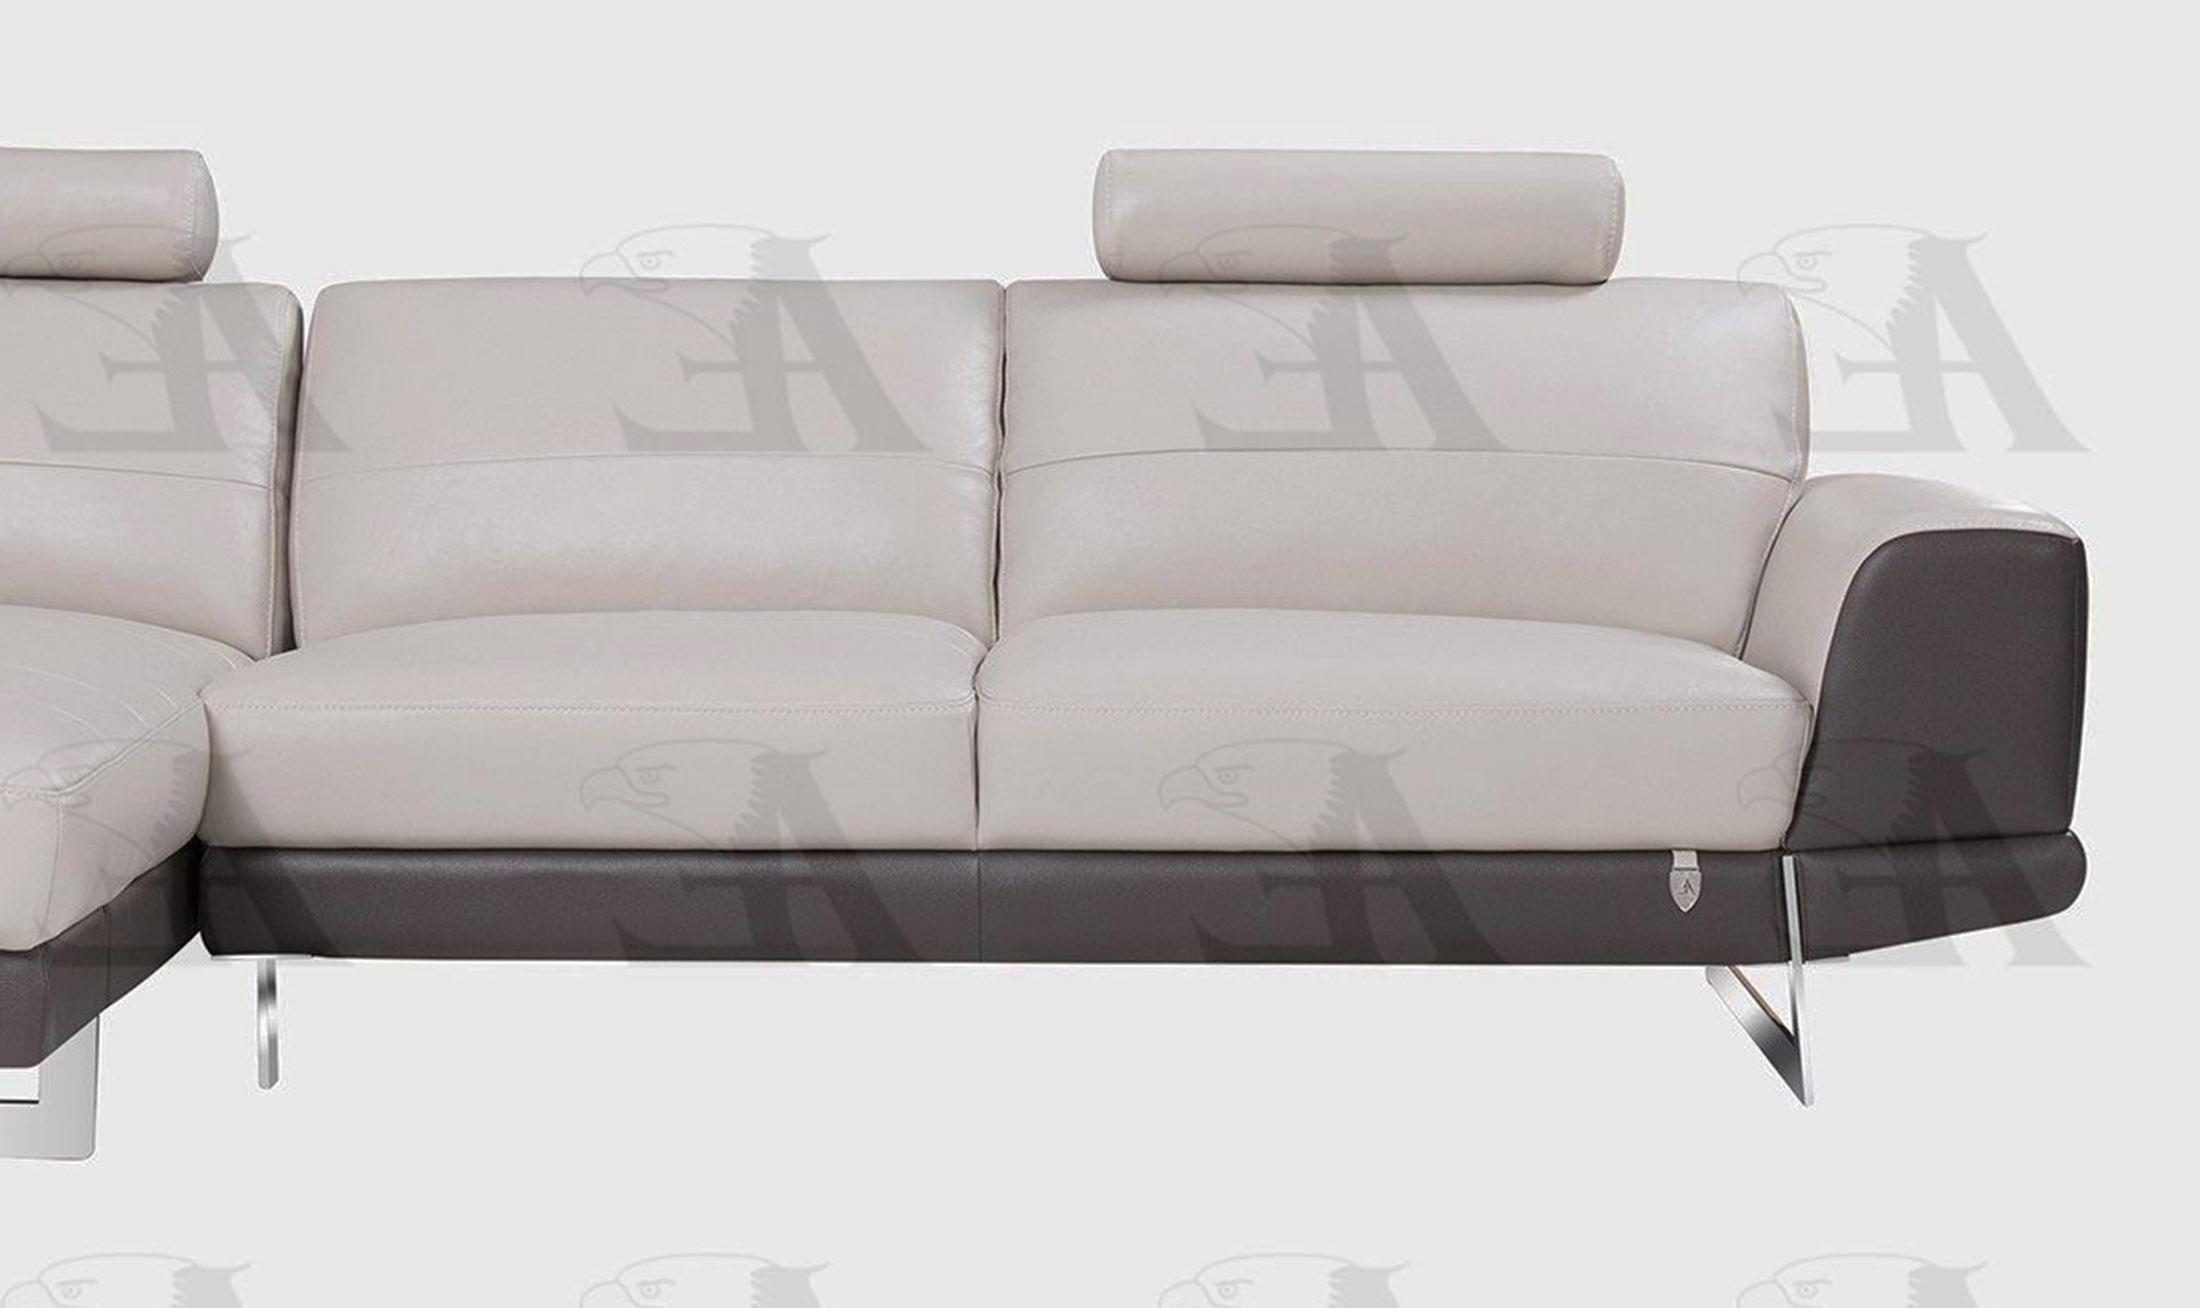 

                    
American Eagle Furniture EK-L062-LG.TPE Sectional Sofa Gray/Taupe Italian Leather Purchase 
